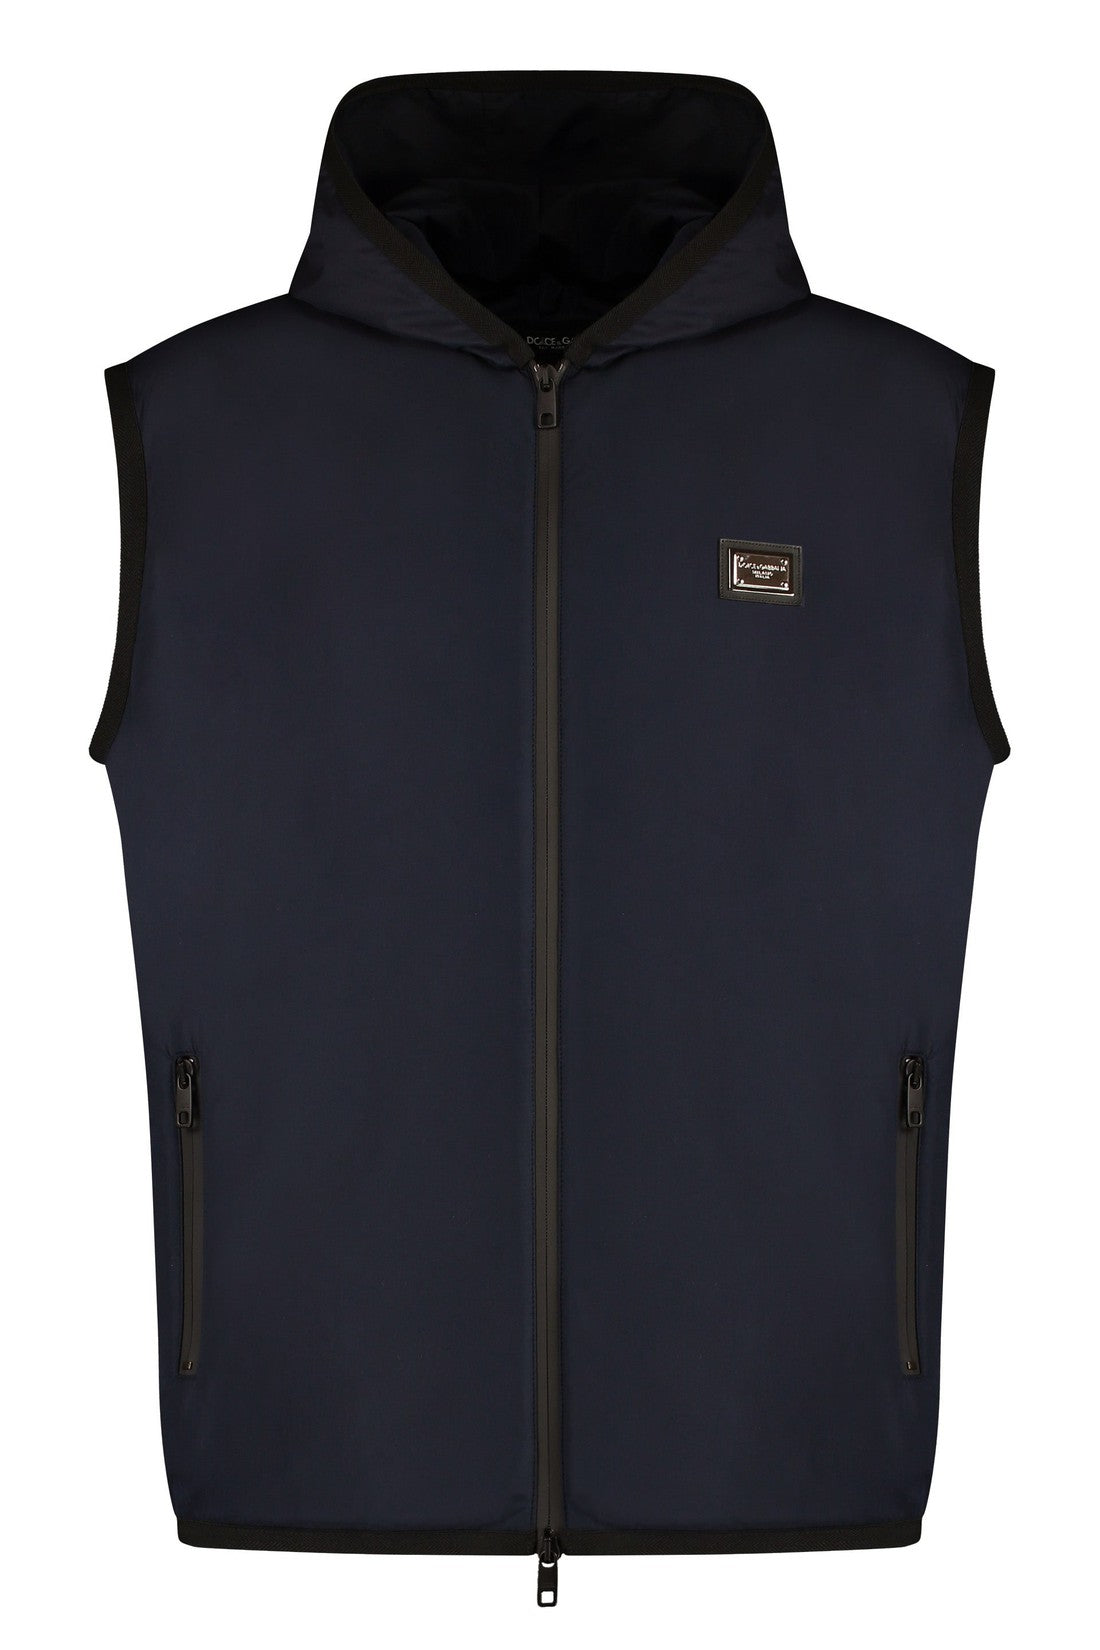 Dolce & Gabbana-OUTLET-SALE-Sporty vest with zipper-ARCHIVIST